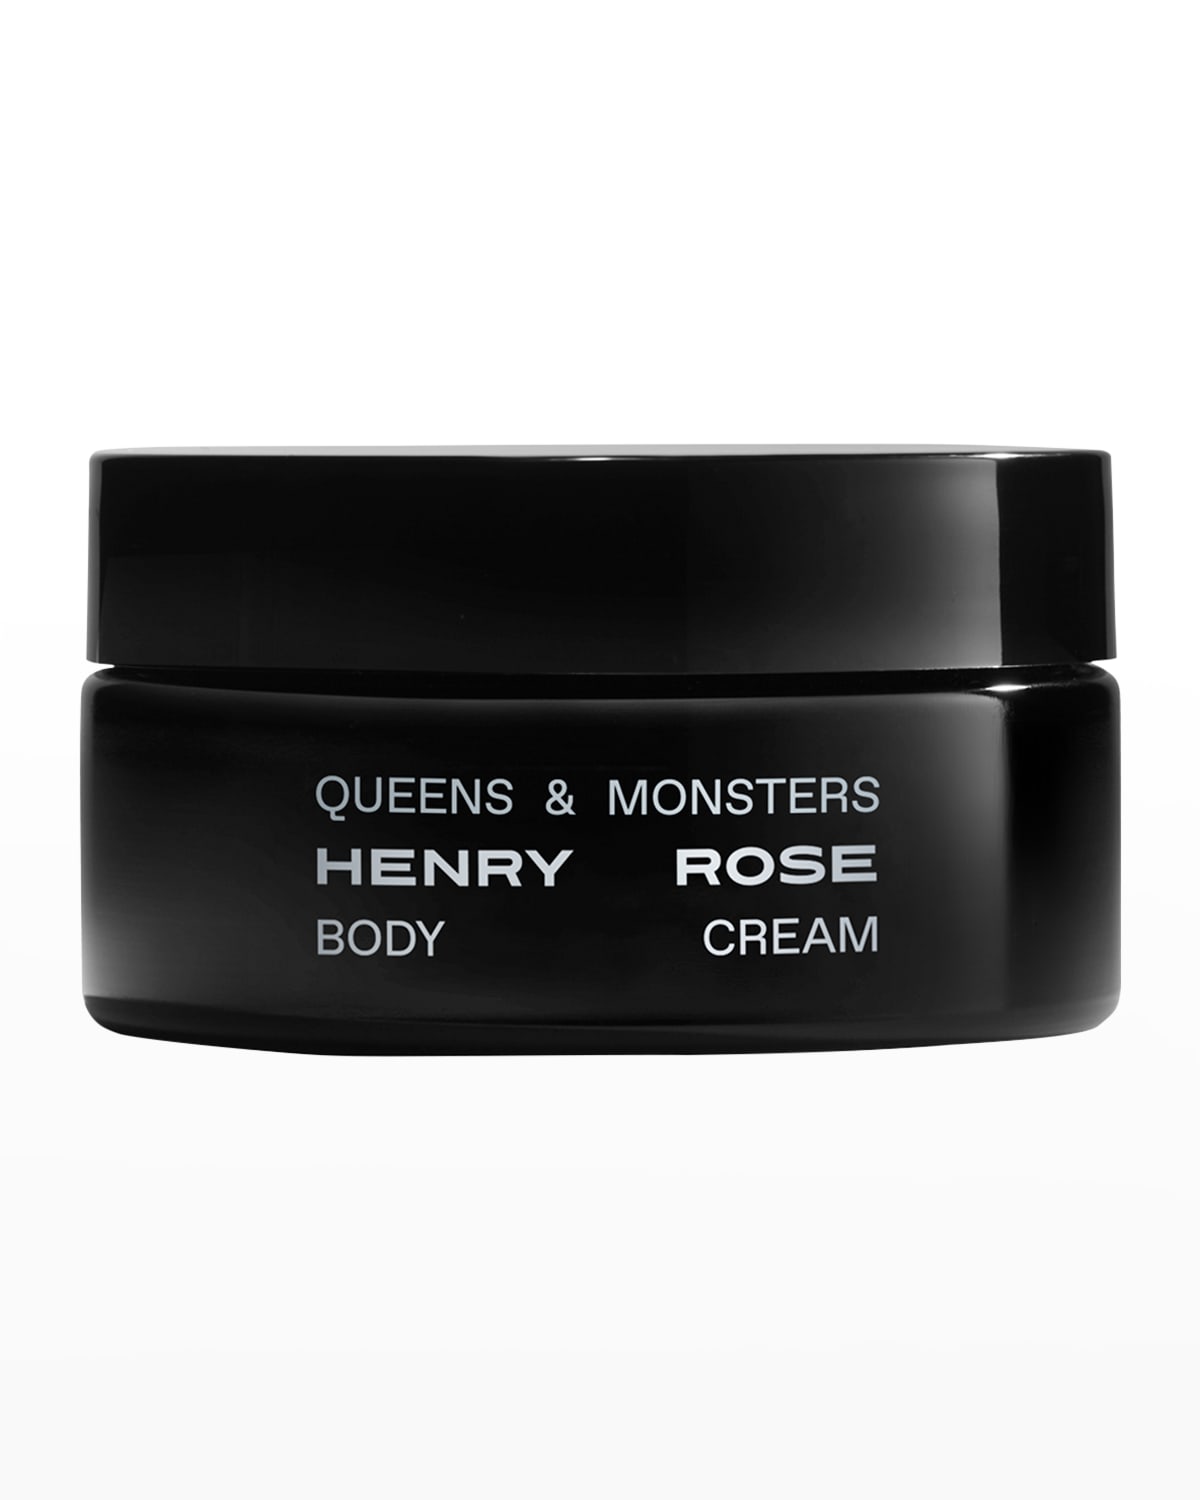 HENRY ROSE 6.8 oz. Q & M Body Cream